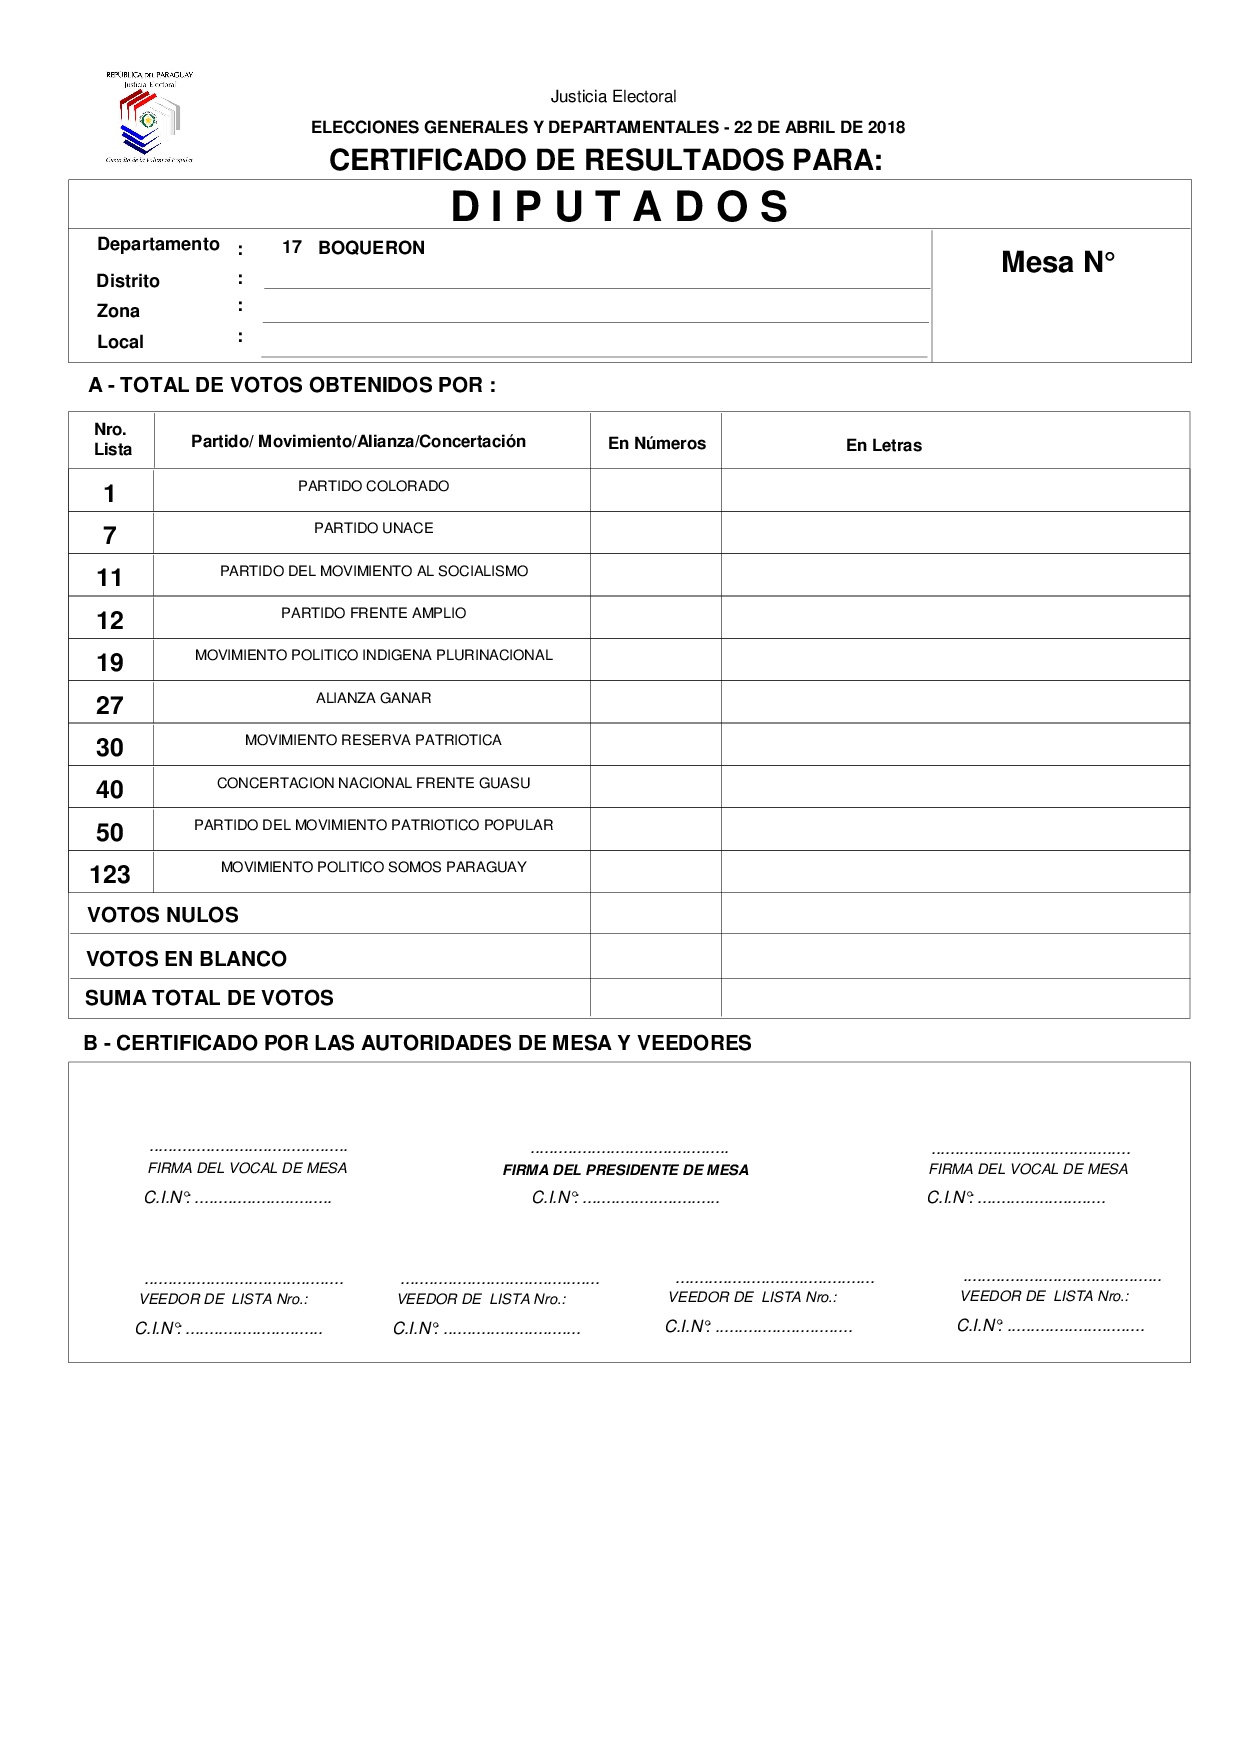 Certificado de Resultados Para Diputados de BOQUERON